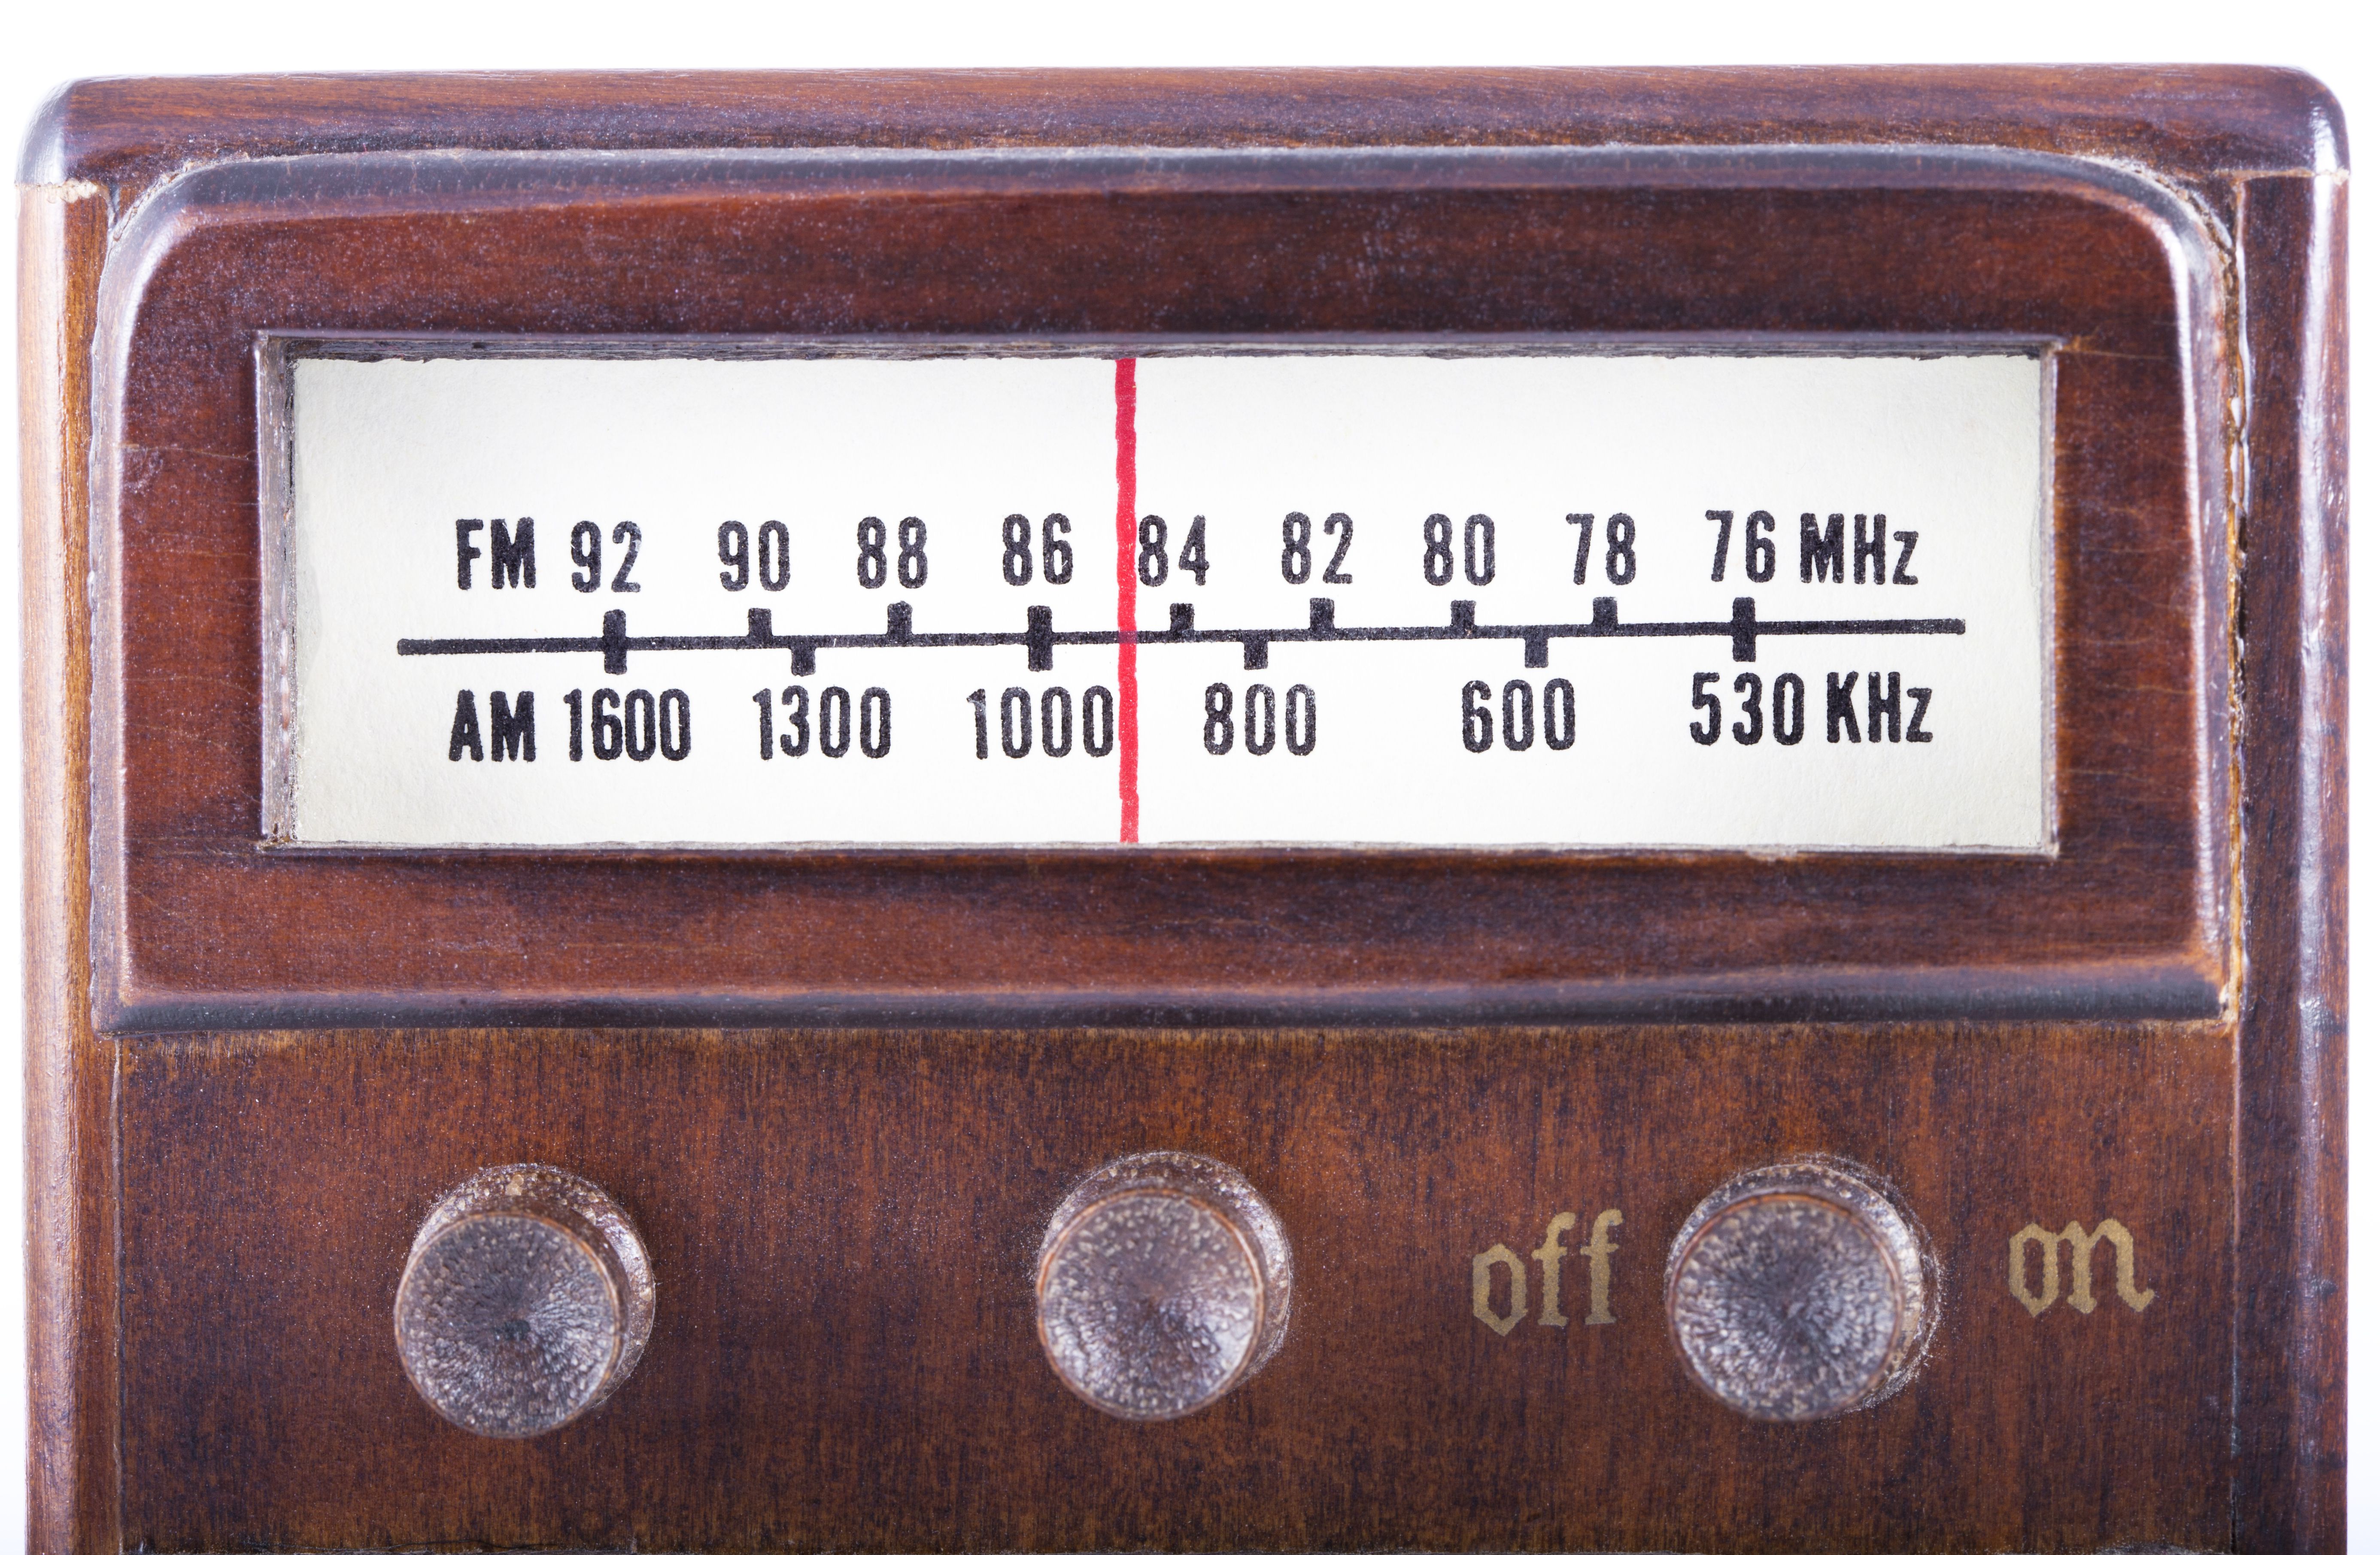 radio band tuner image close up graphic 1950s